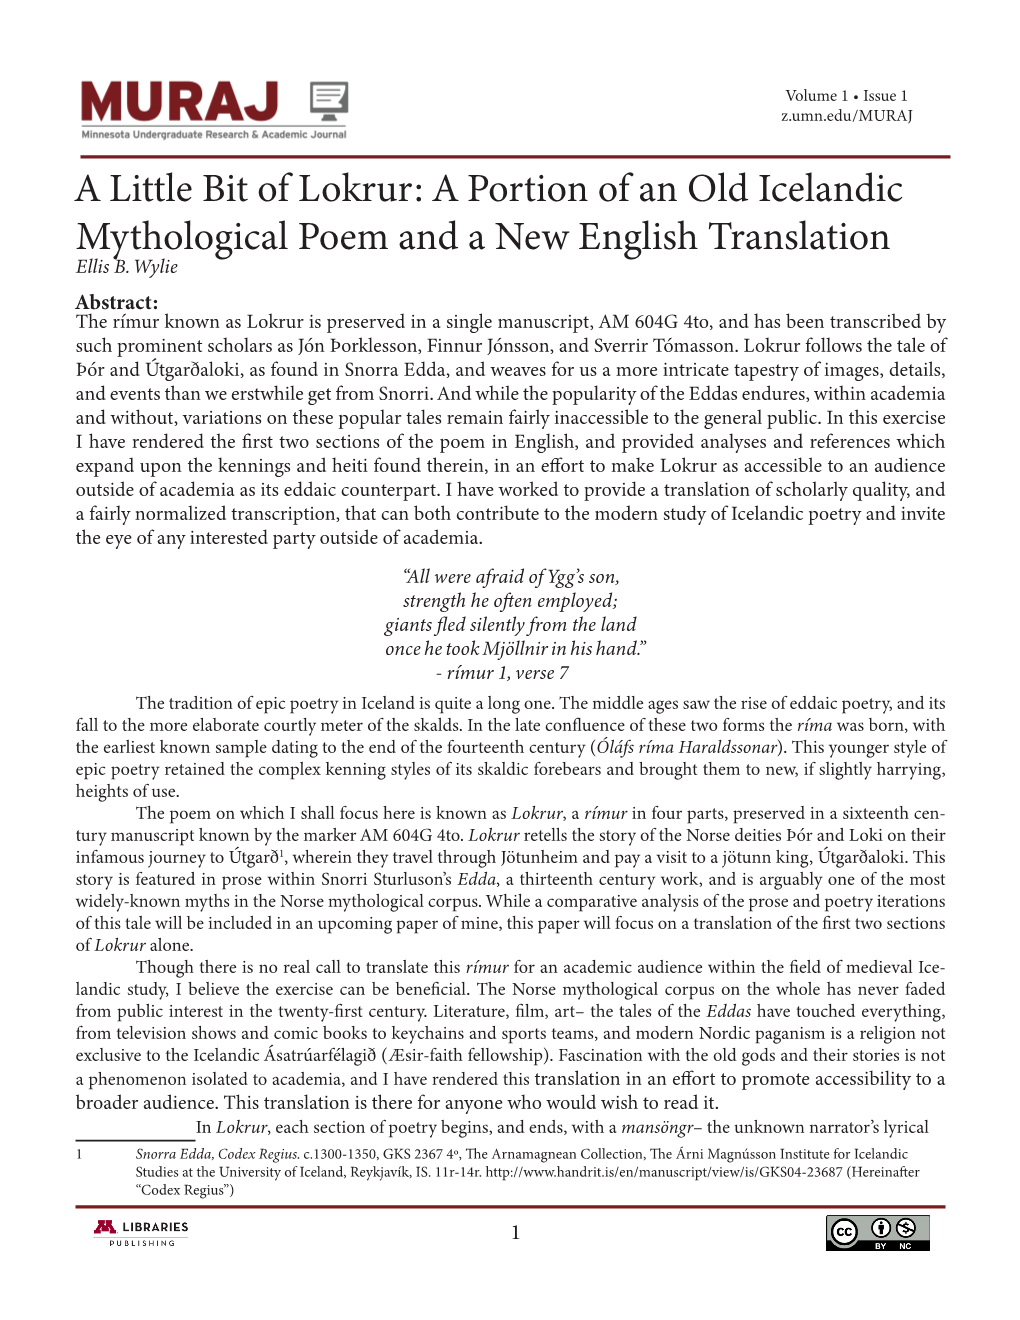 A Portion of an Old Icelandic Mythological Poem and a New English Translation Ellis B